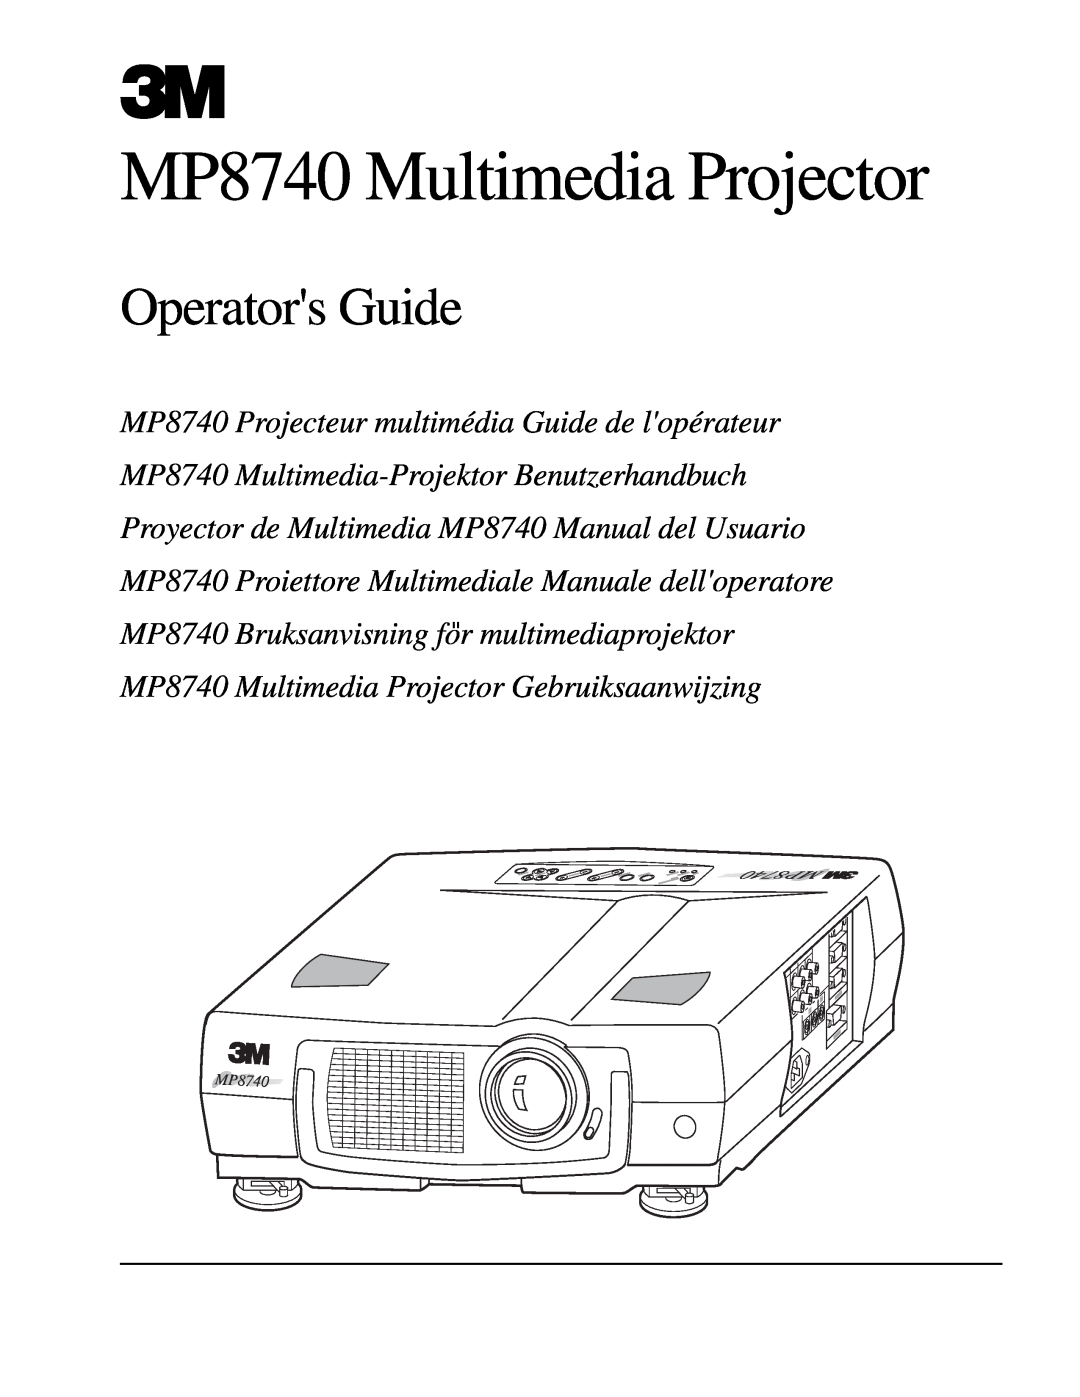 3M manual MP8740 Multimedia Projector, Operators Guide 